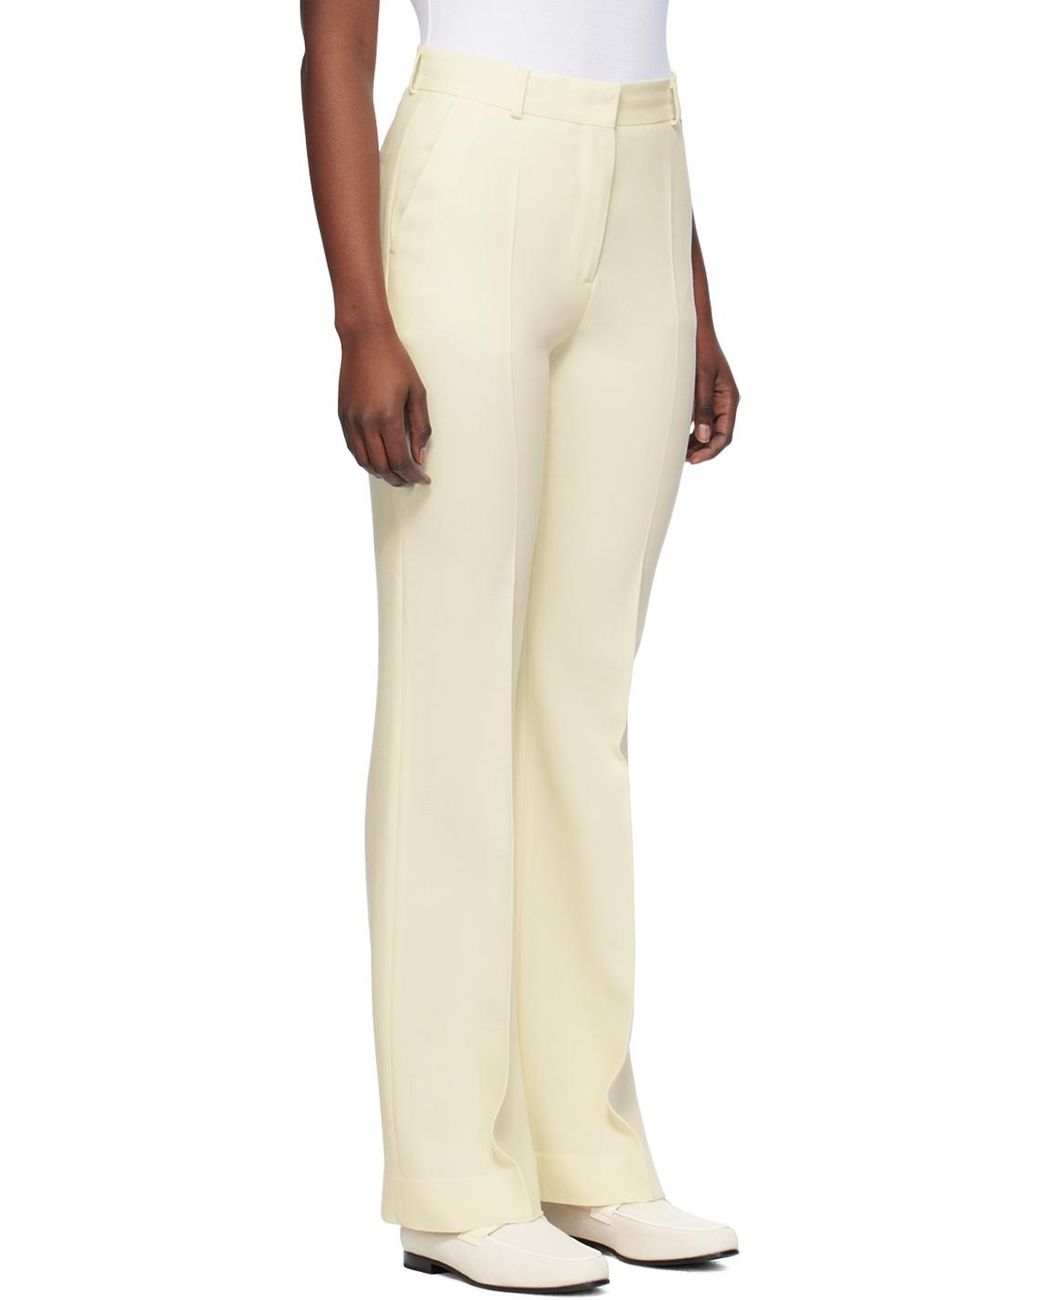 Skyline Wide-leg White Trousers (ECOVERO certified fabric) - DALB